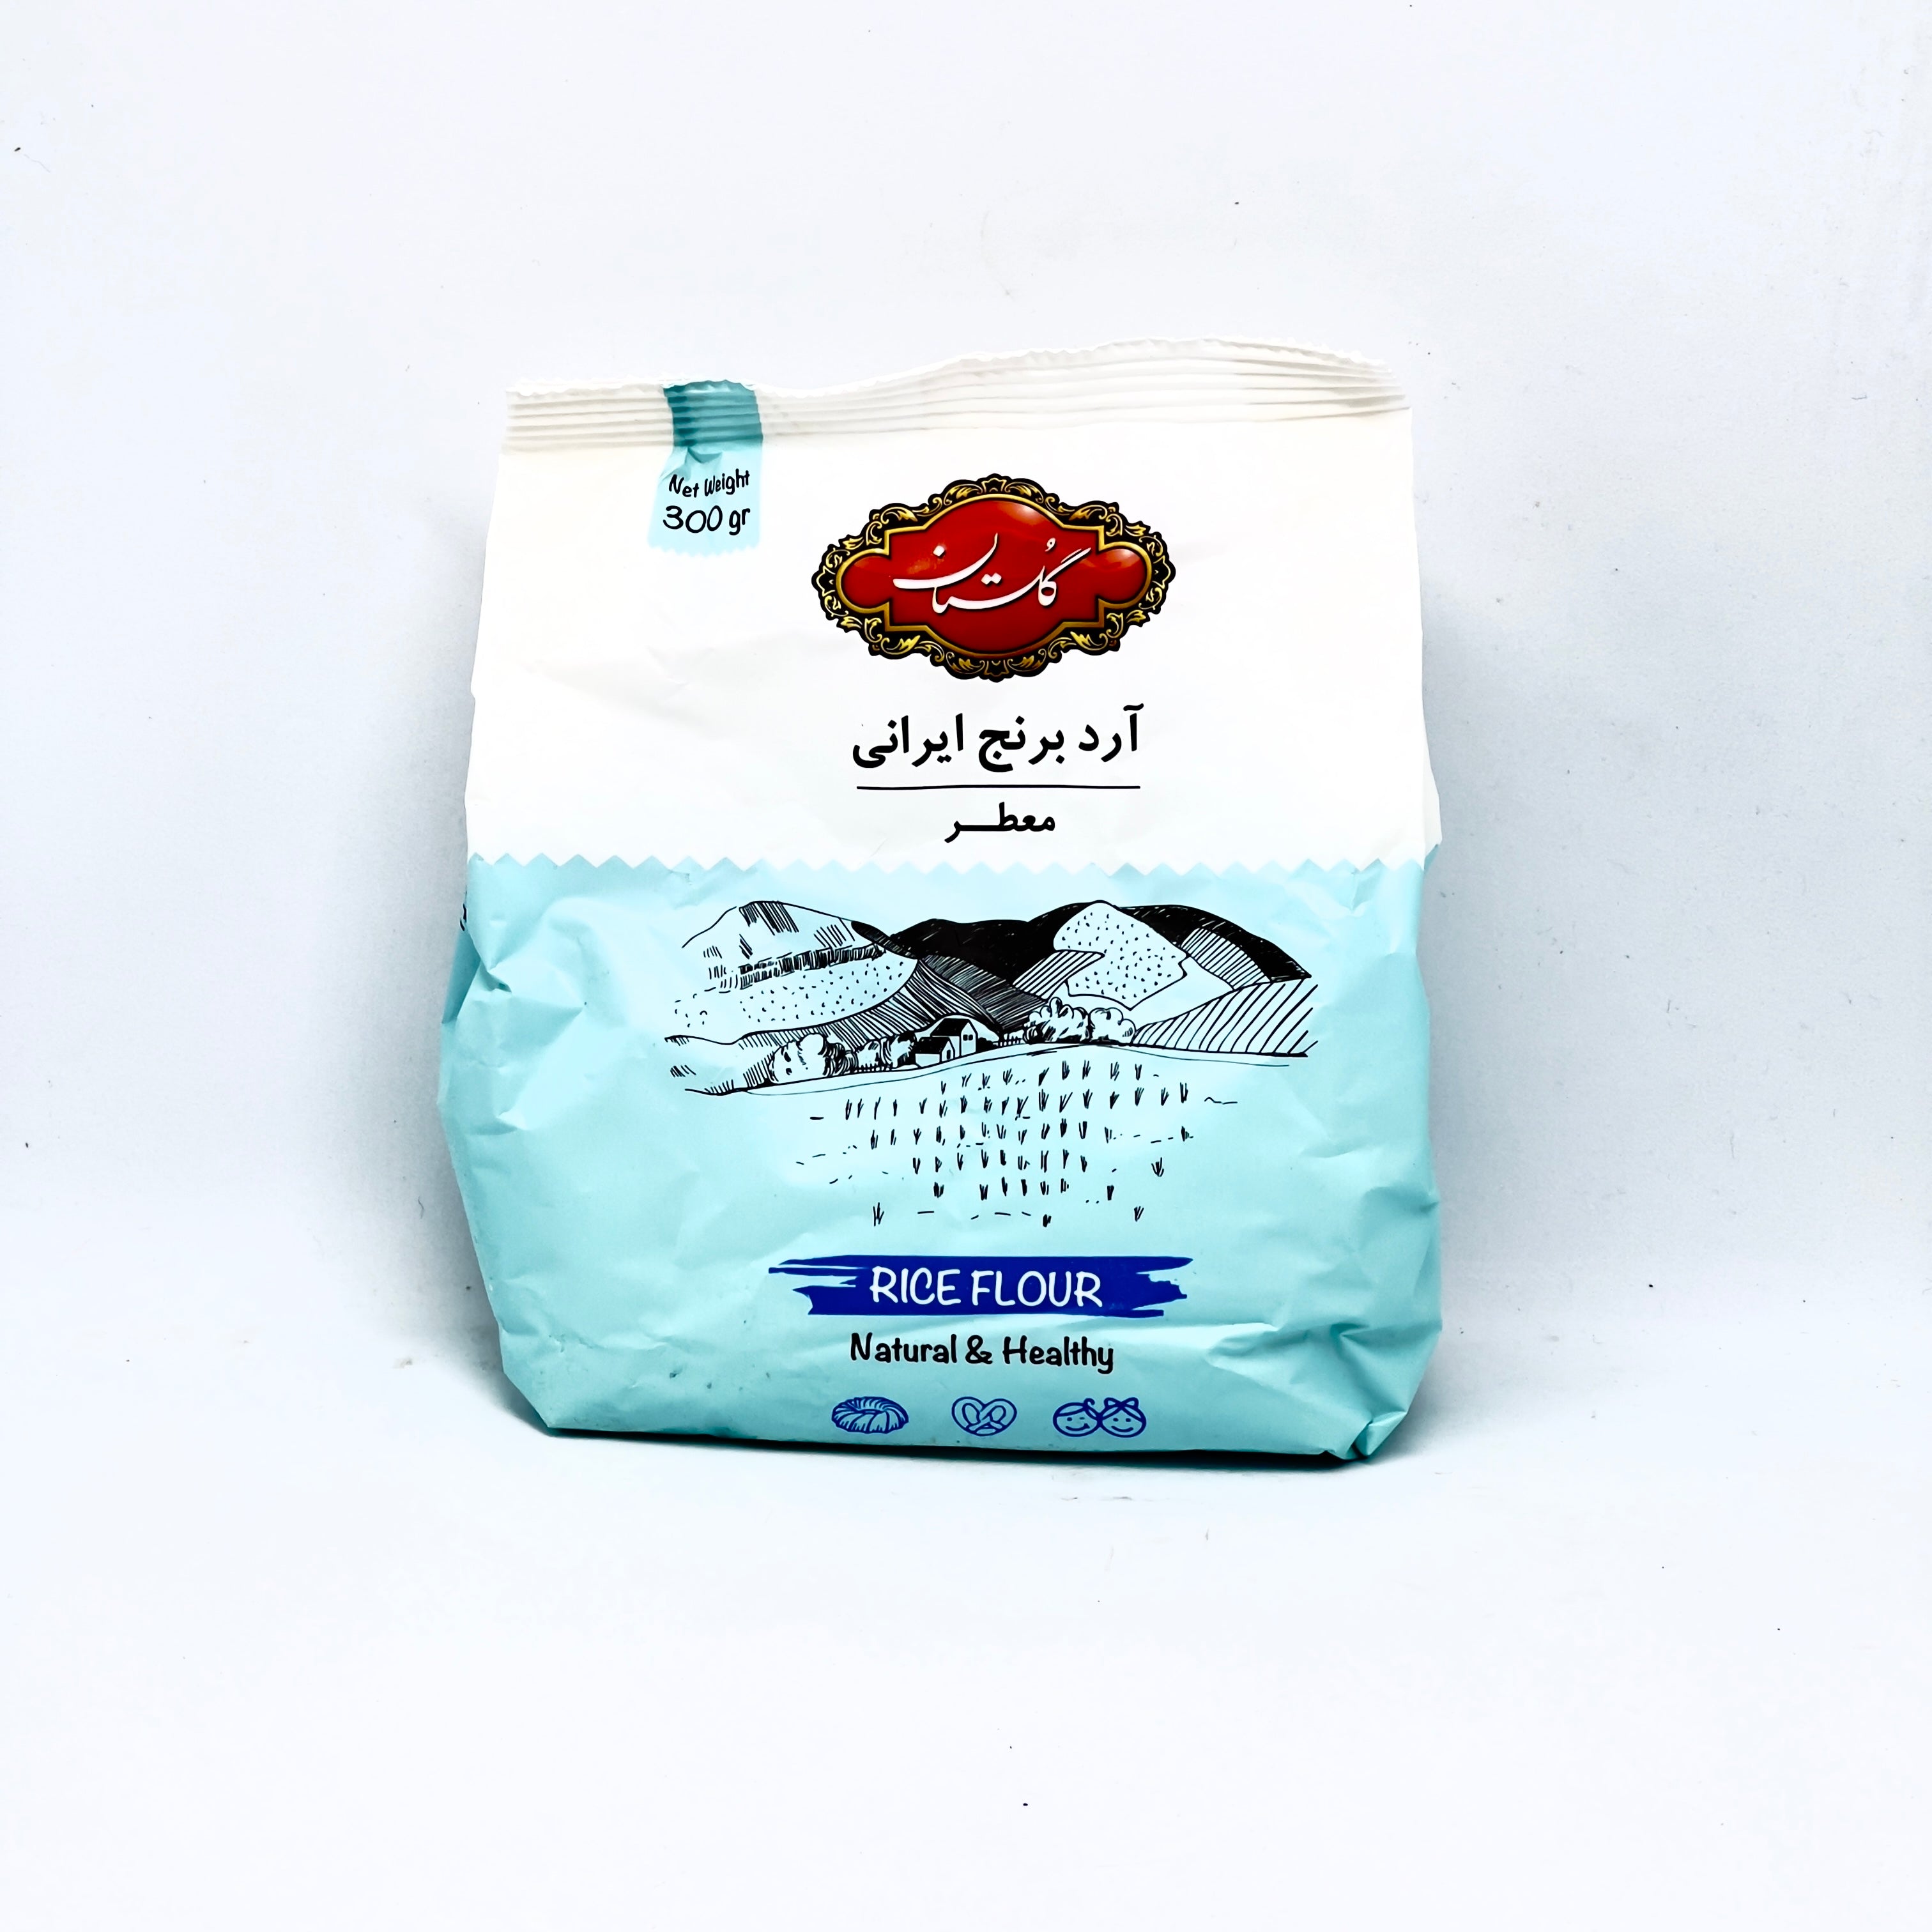 GOLESTAN Rice Flour 300g